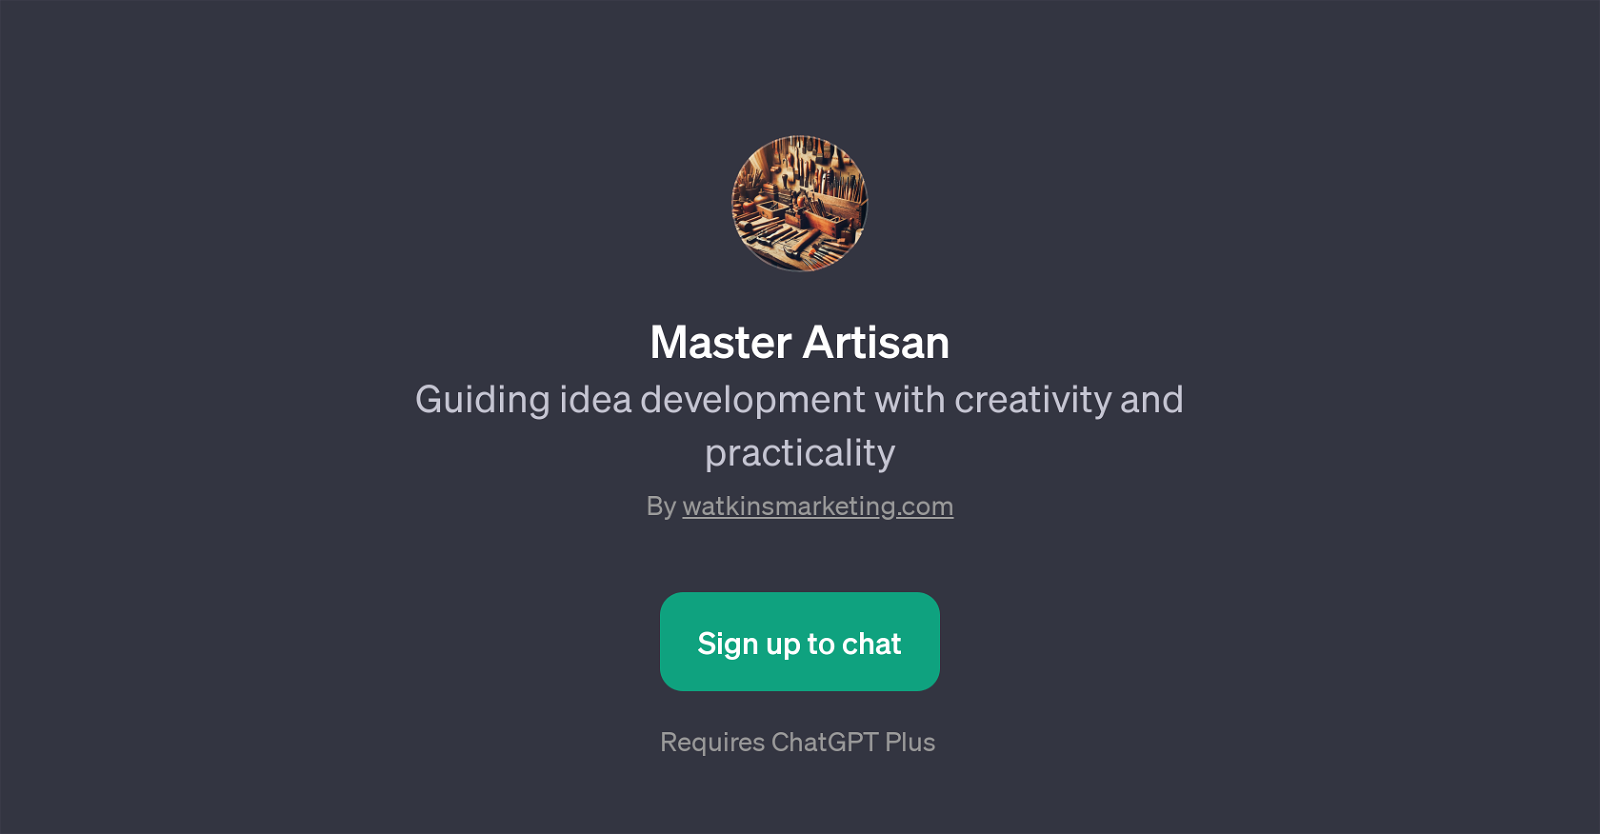 Master Artisan website